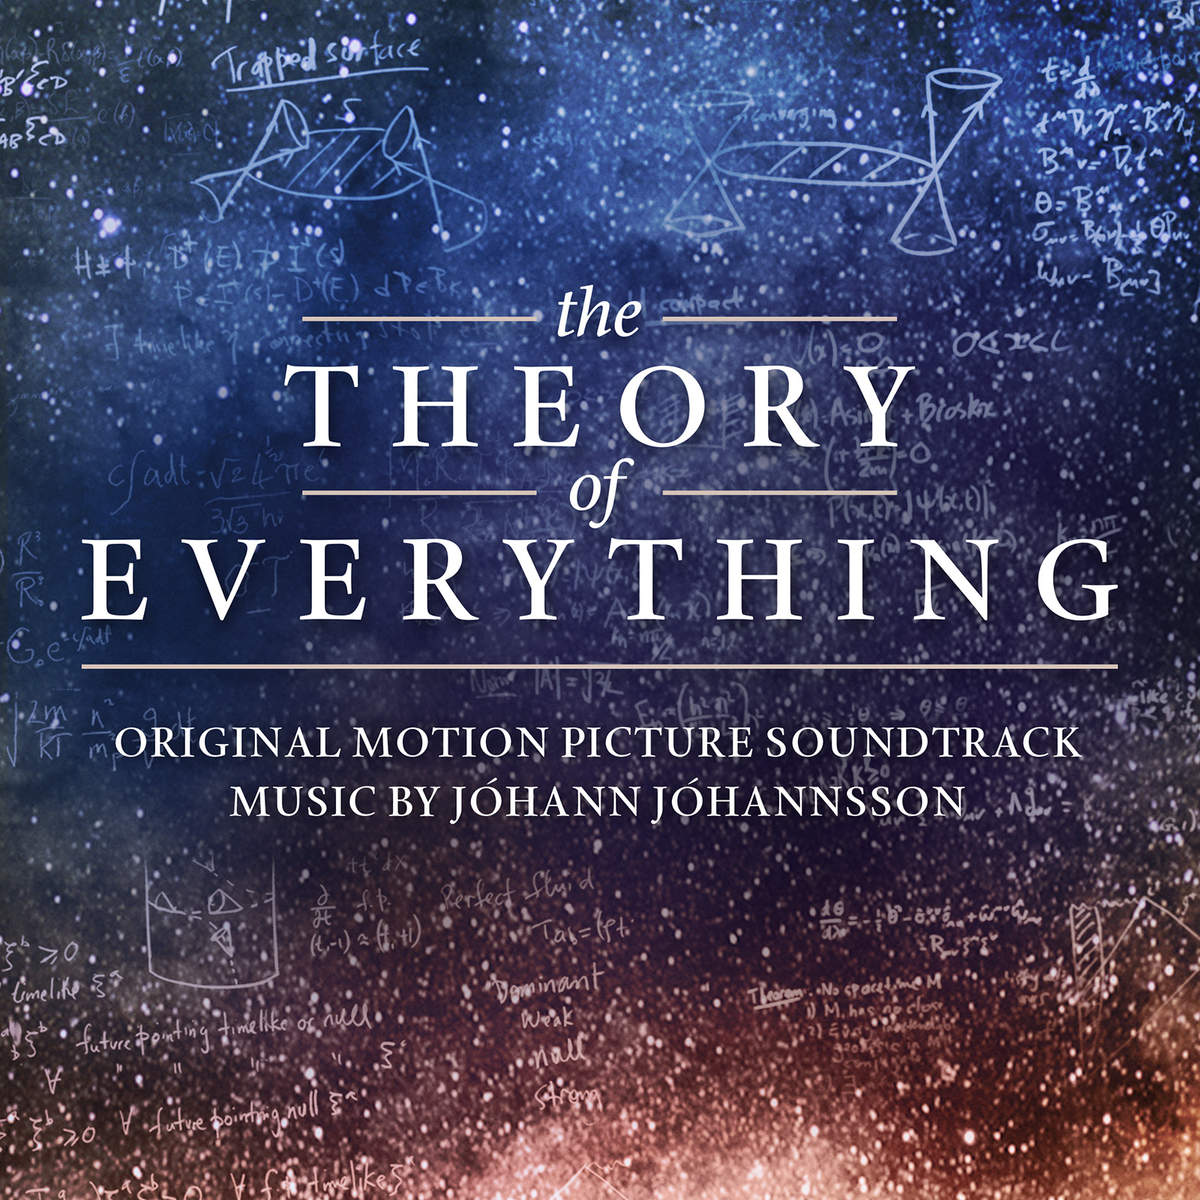 The theory of everything. Вселенная Стивена Хокинга. Вселенная Стивена Хокинга обложка. The Theory of everything обложка.